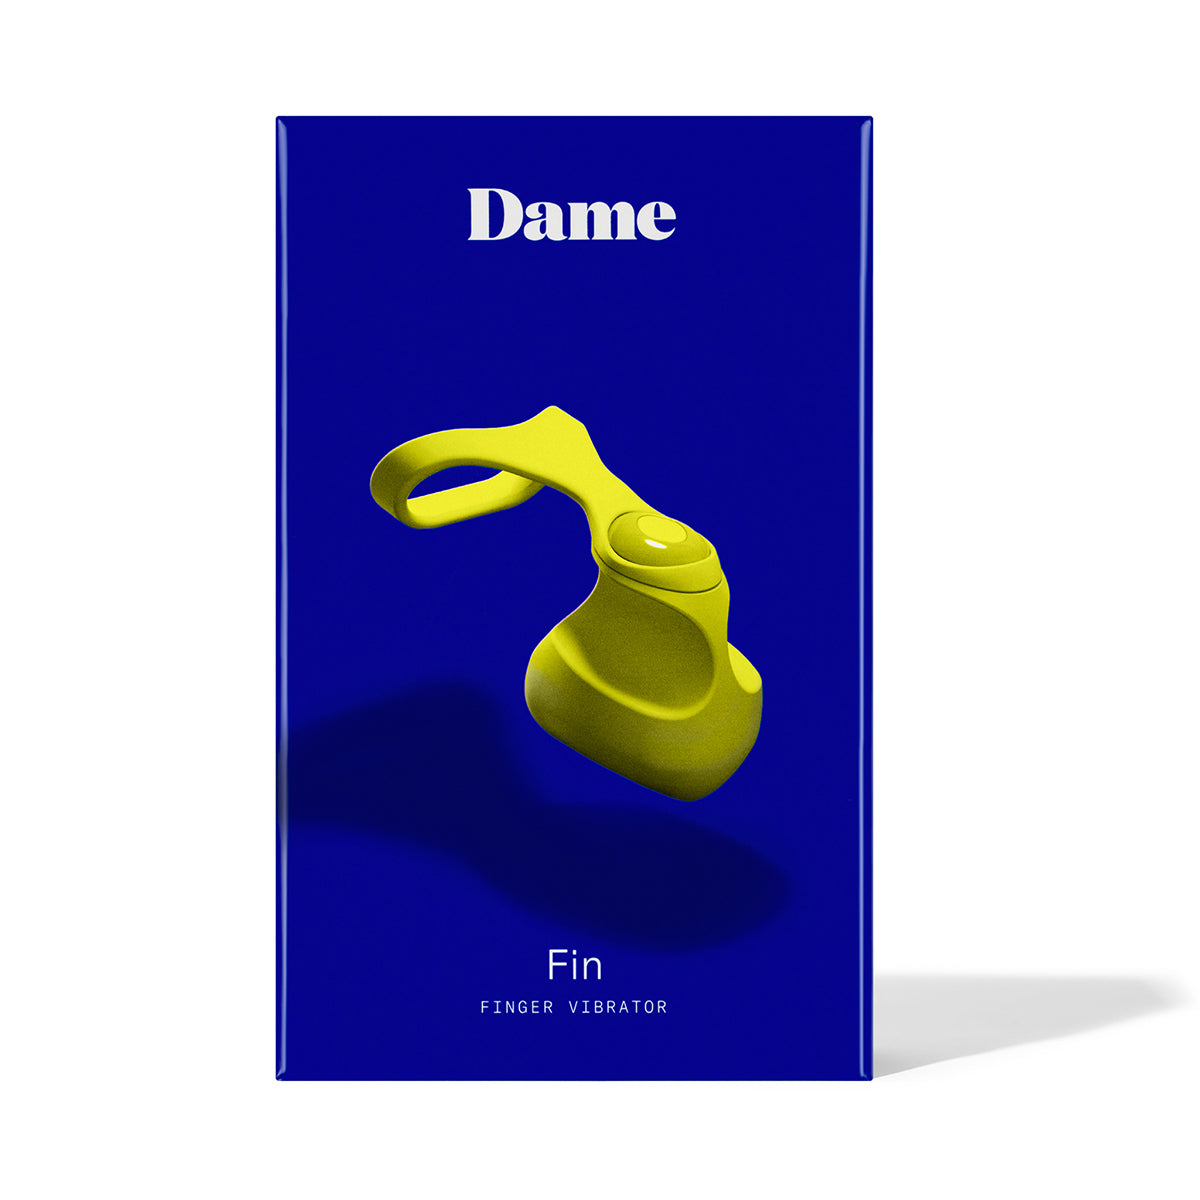 Fin by Dame - Quartz